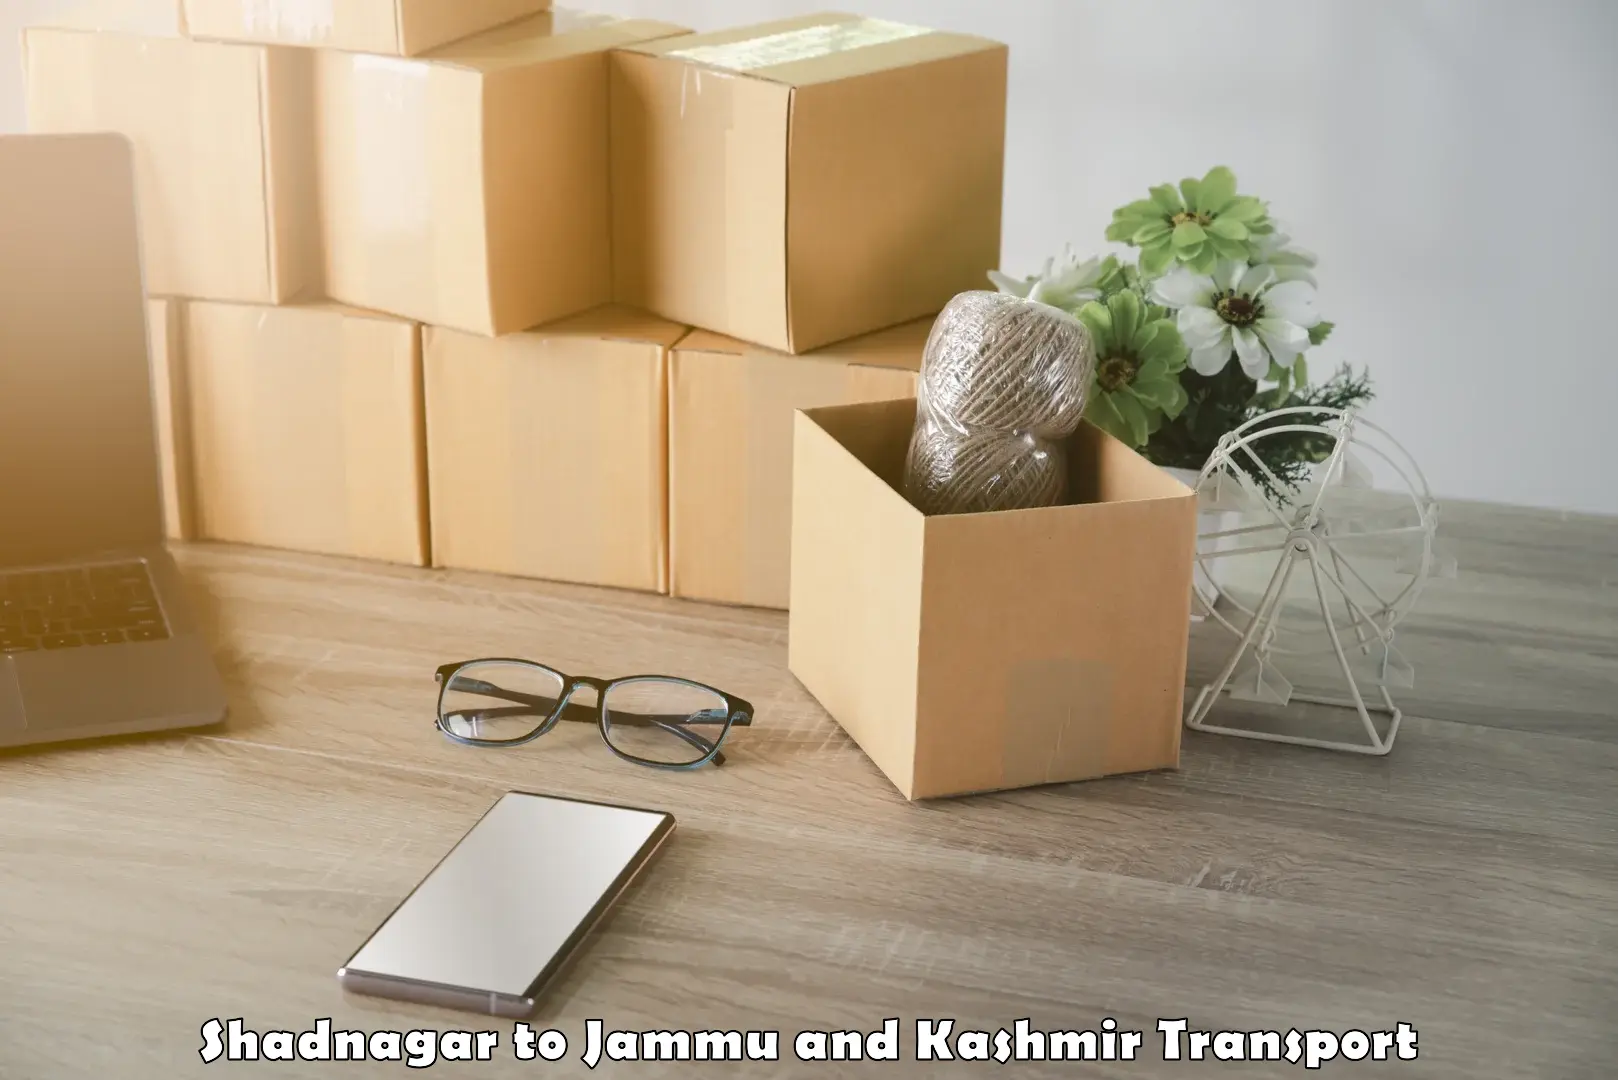 Commercial transport service Shadnagar to Jammu and Kashmir